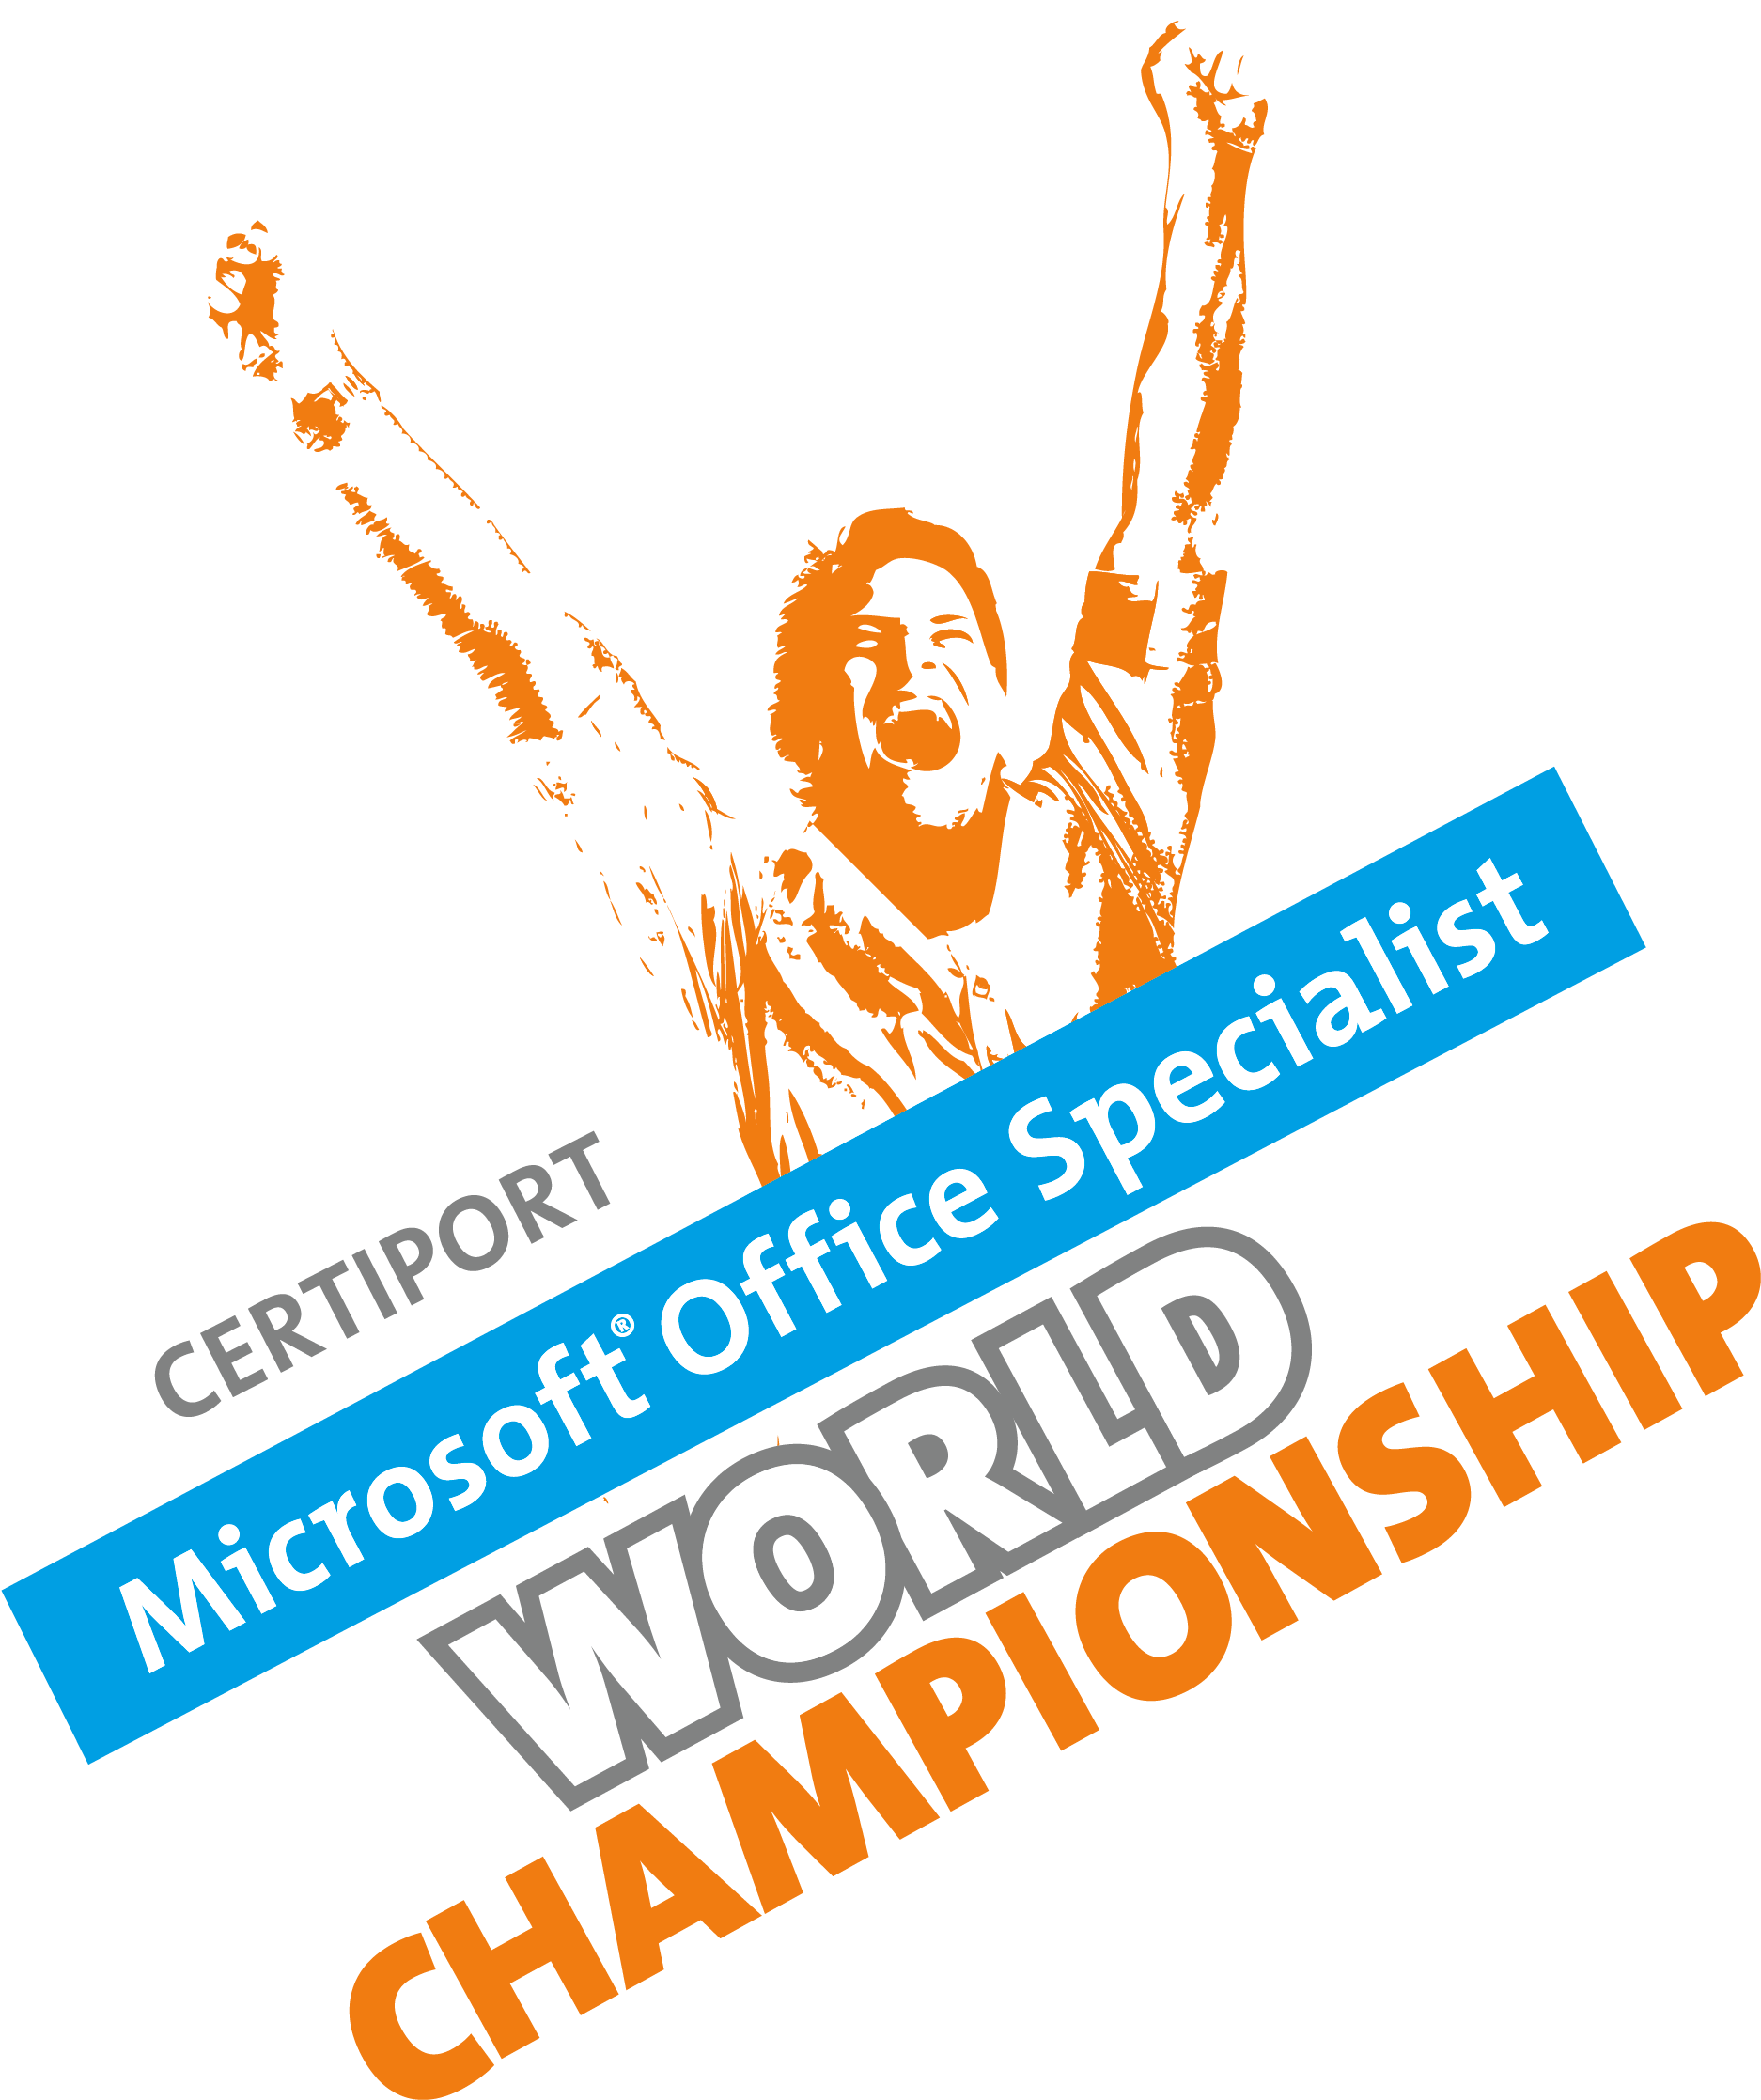 Microsoft Office Specialist World Championship - Microsoft Office Specialist World Championship 2017 (2400x2400)